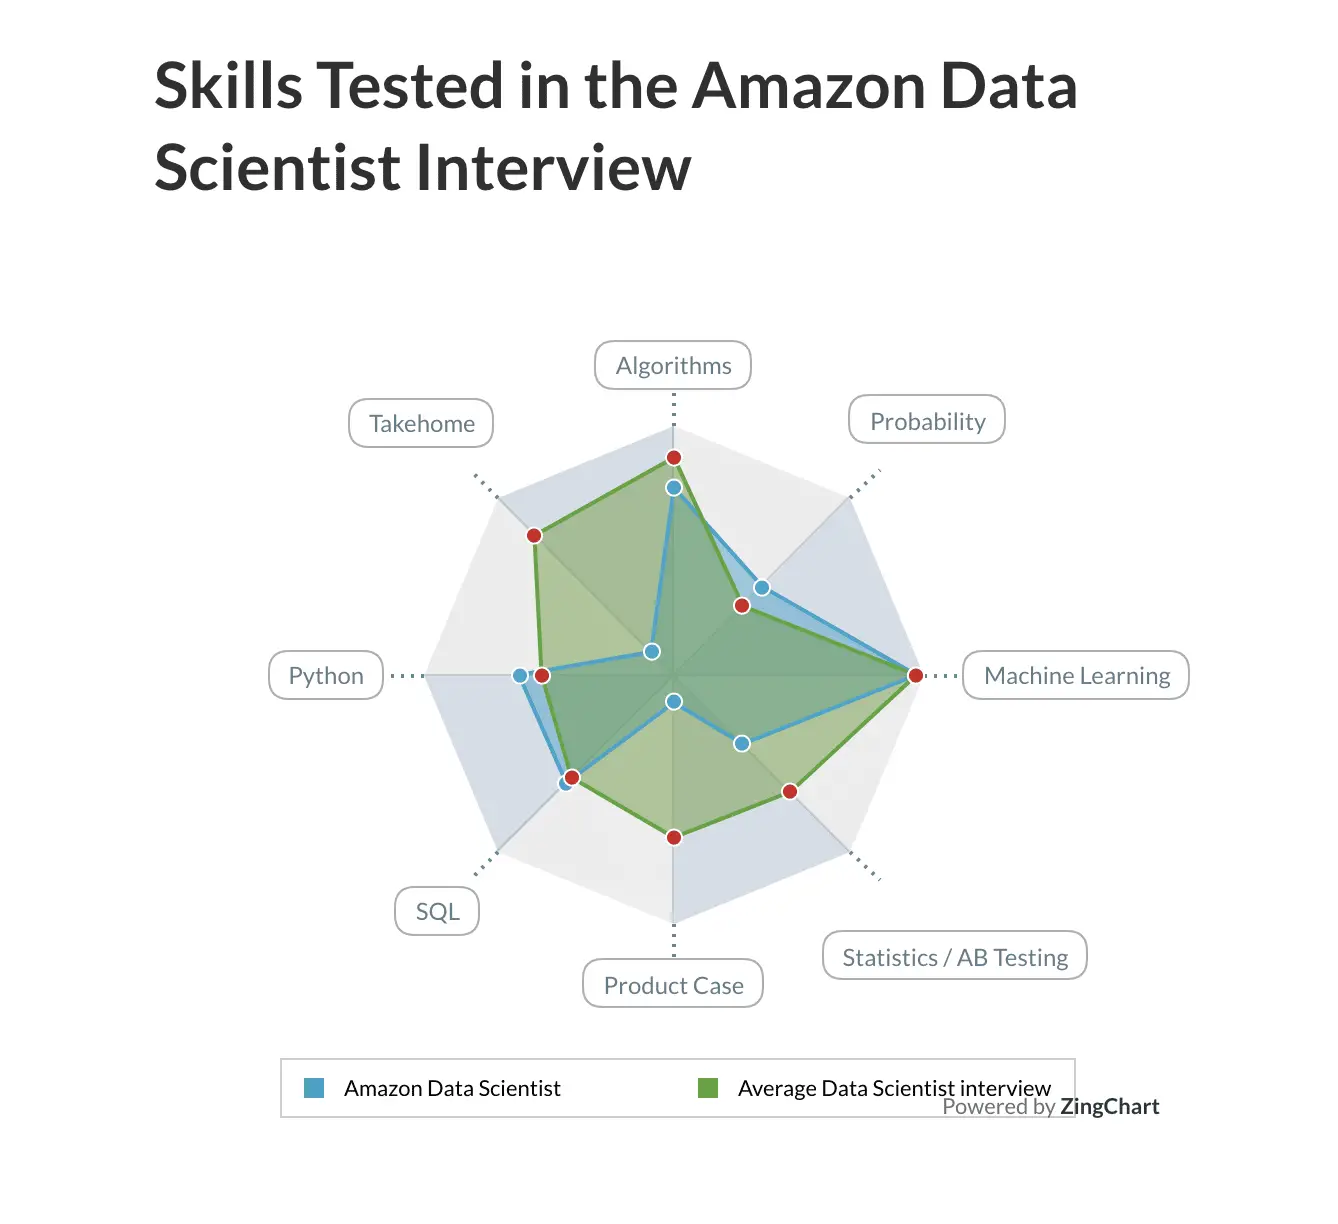 The Amazon Data Scientist Interview